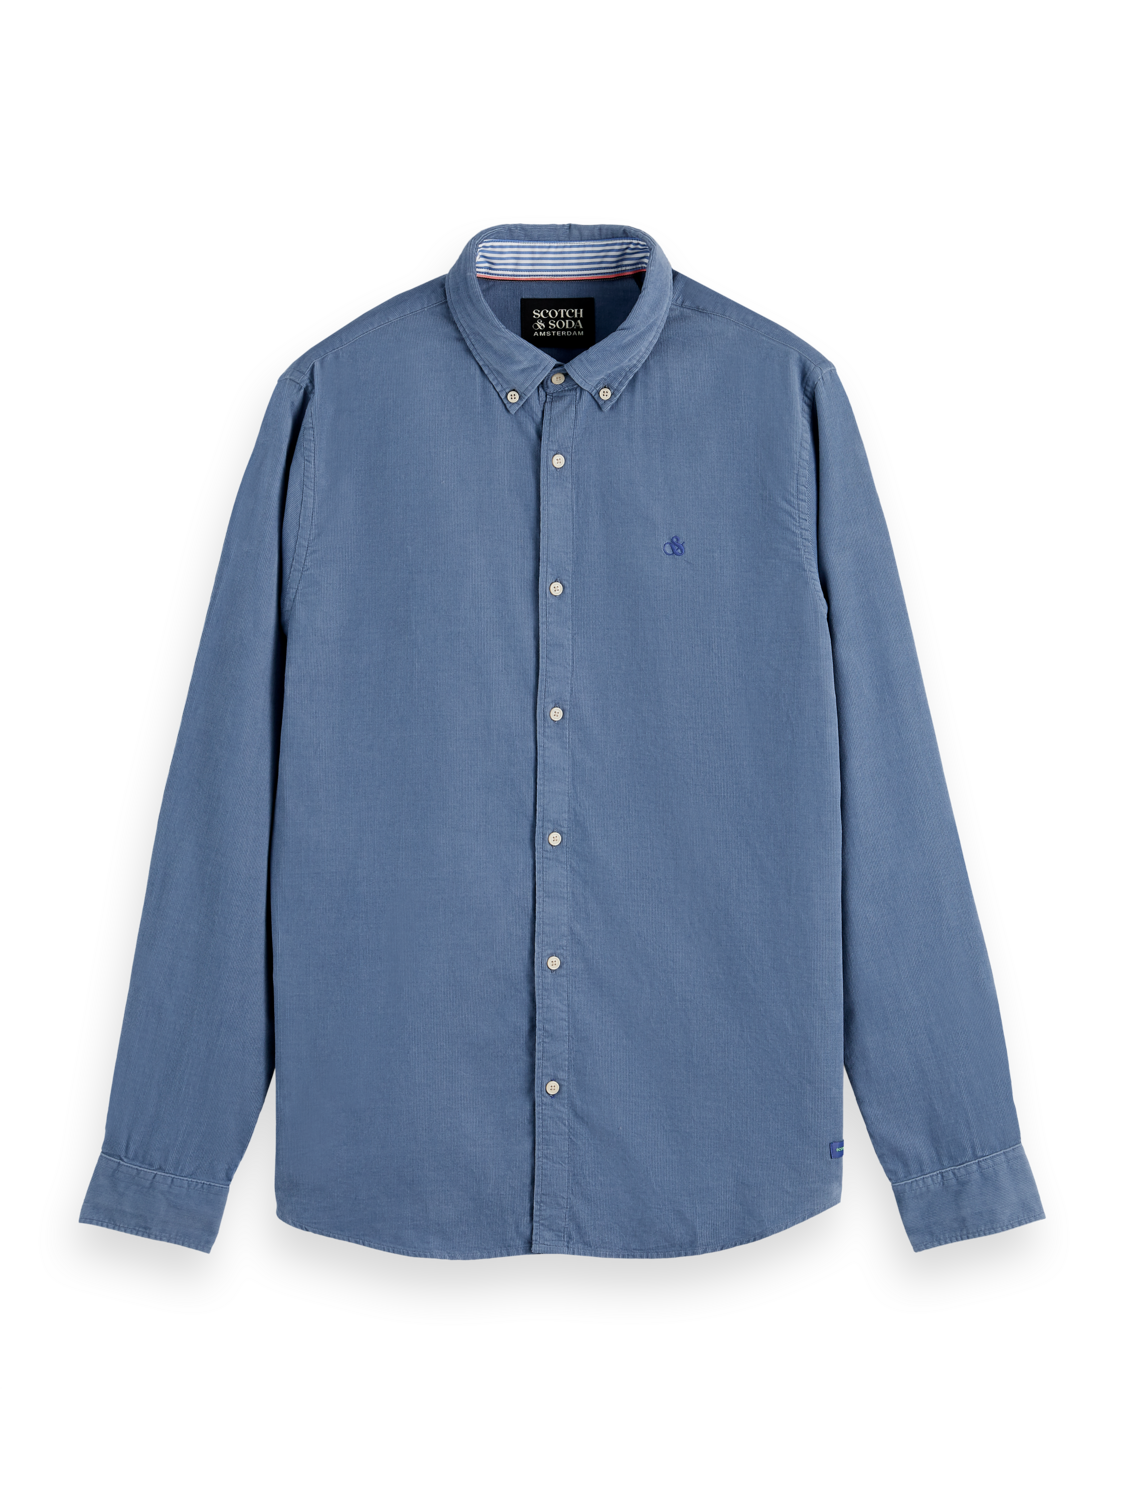 Scotch & Soda - Fine Corduroy Shirt - Cosmos Blue